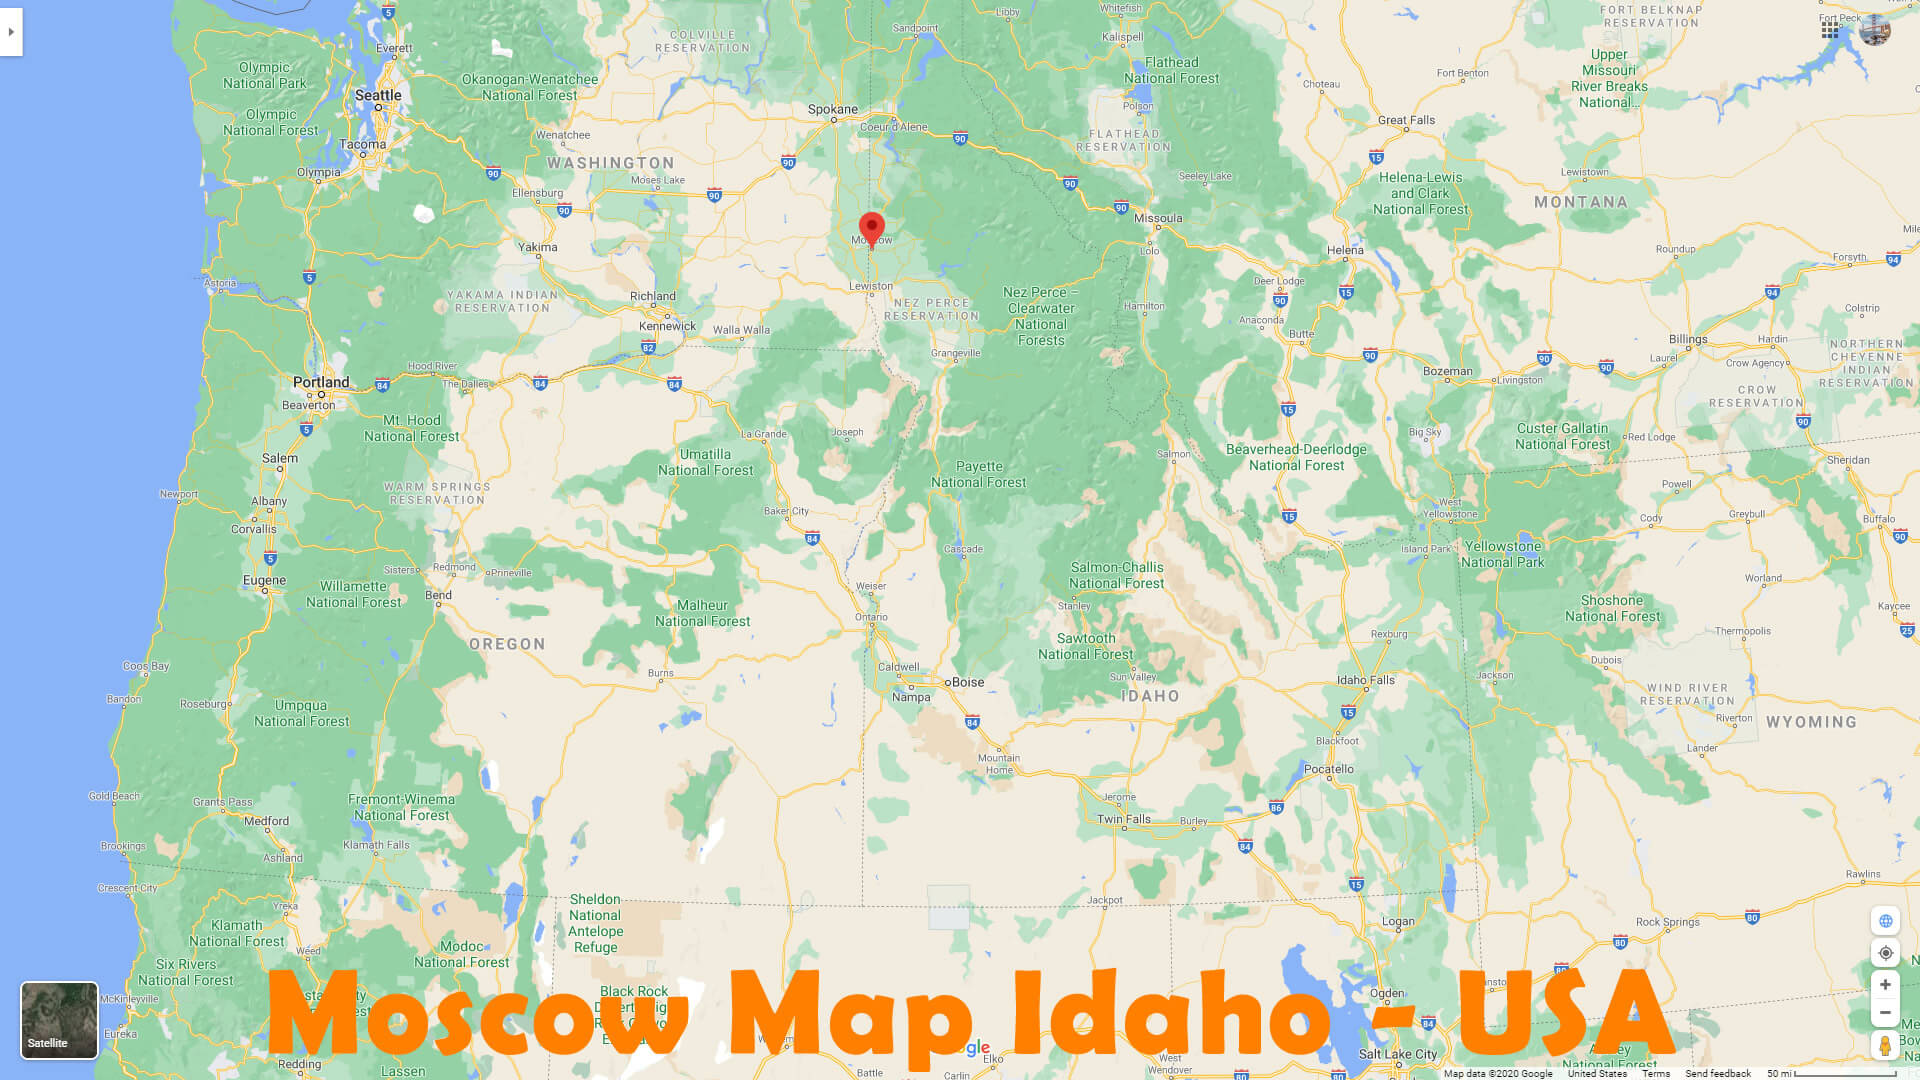 Moscow Map Idaho   USA